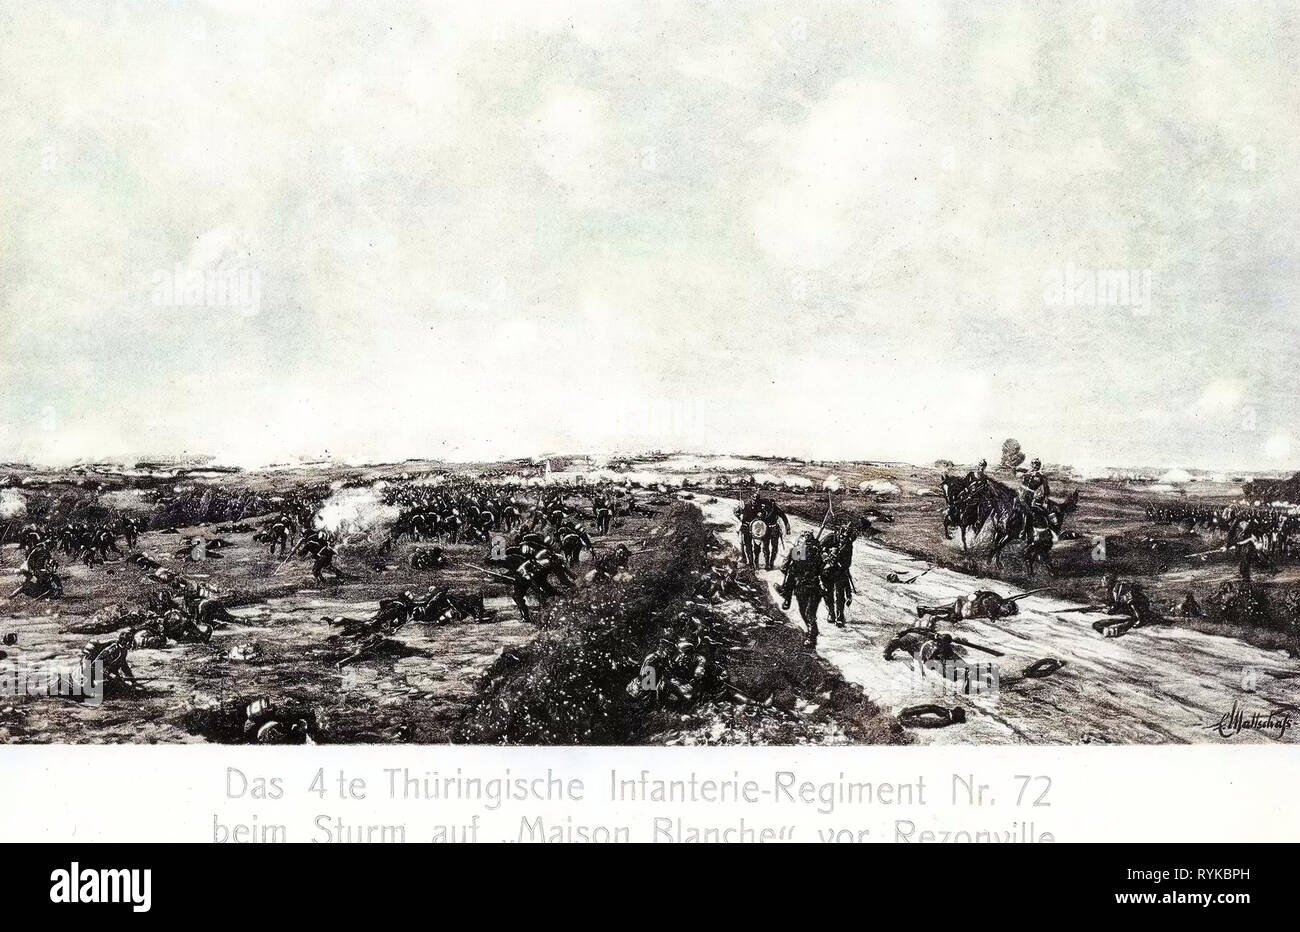 1870 in Francia, la battaglia di Mars-la-Tour, 4. Thüringisches Infanterie-Regiment Nr. 72, dipinti in Sassonia, Torgau, 1912, Schlachtenbild Sturm vor Rezonville Frankreich 1870, Germania Foto Stock